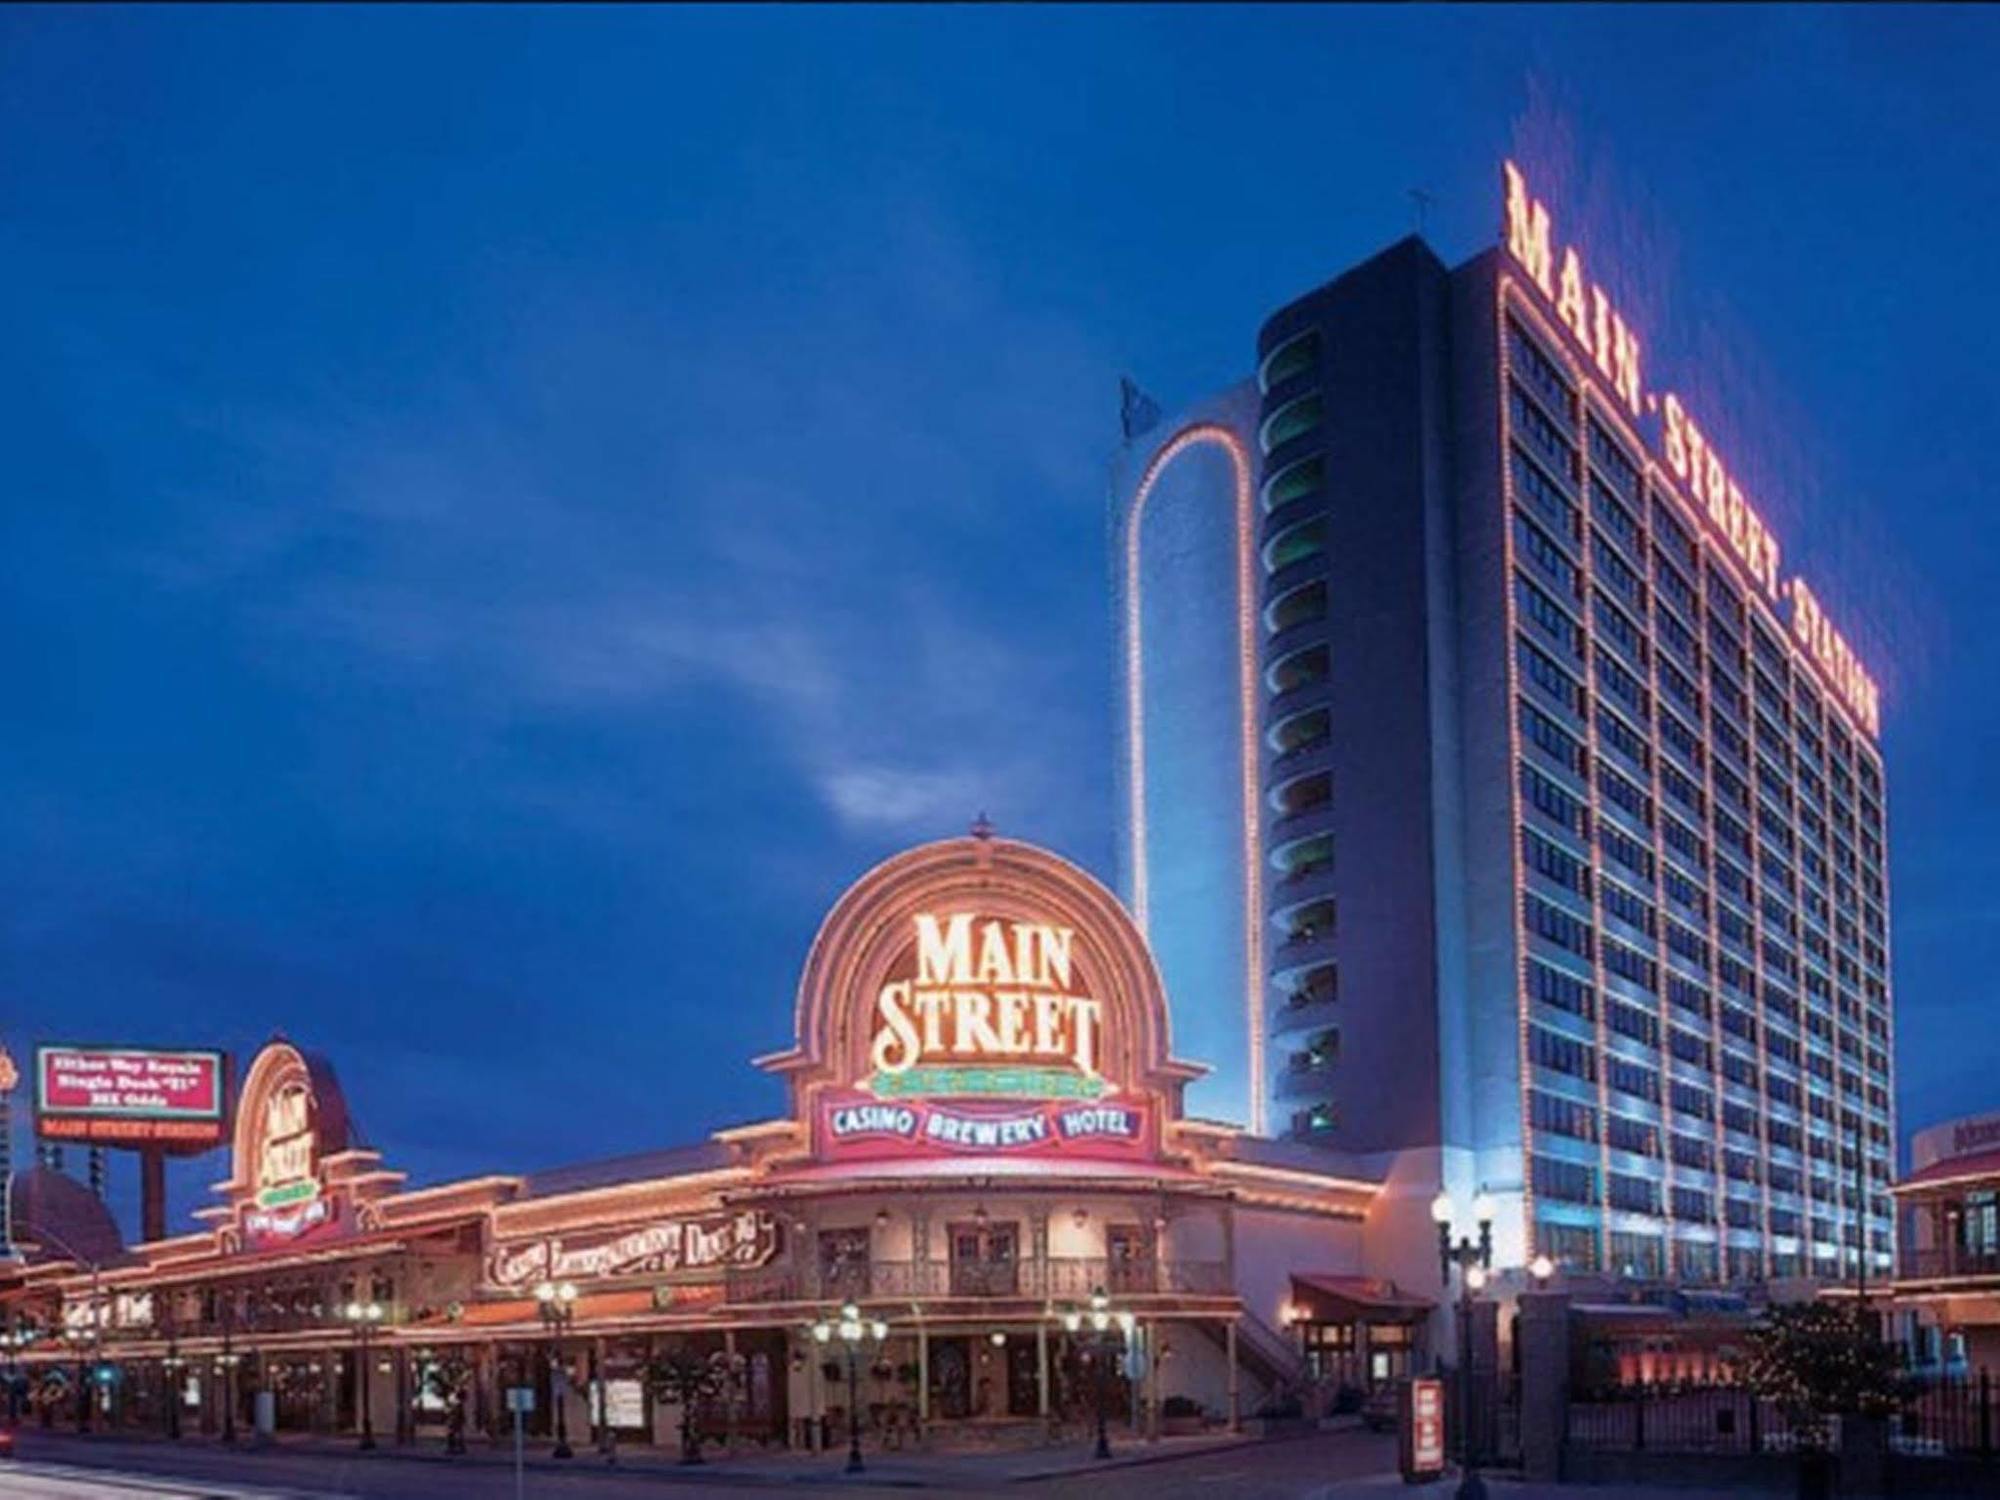 Main Street Station Casino Brewery And Hotel Las Vegas Exterior photo